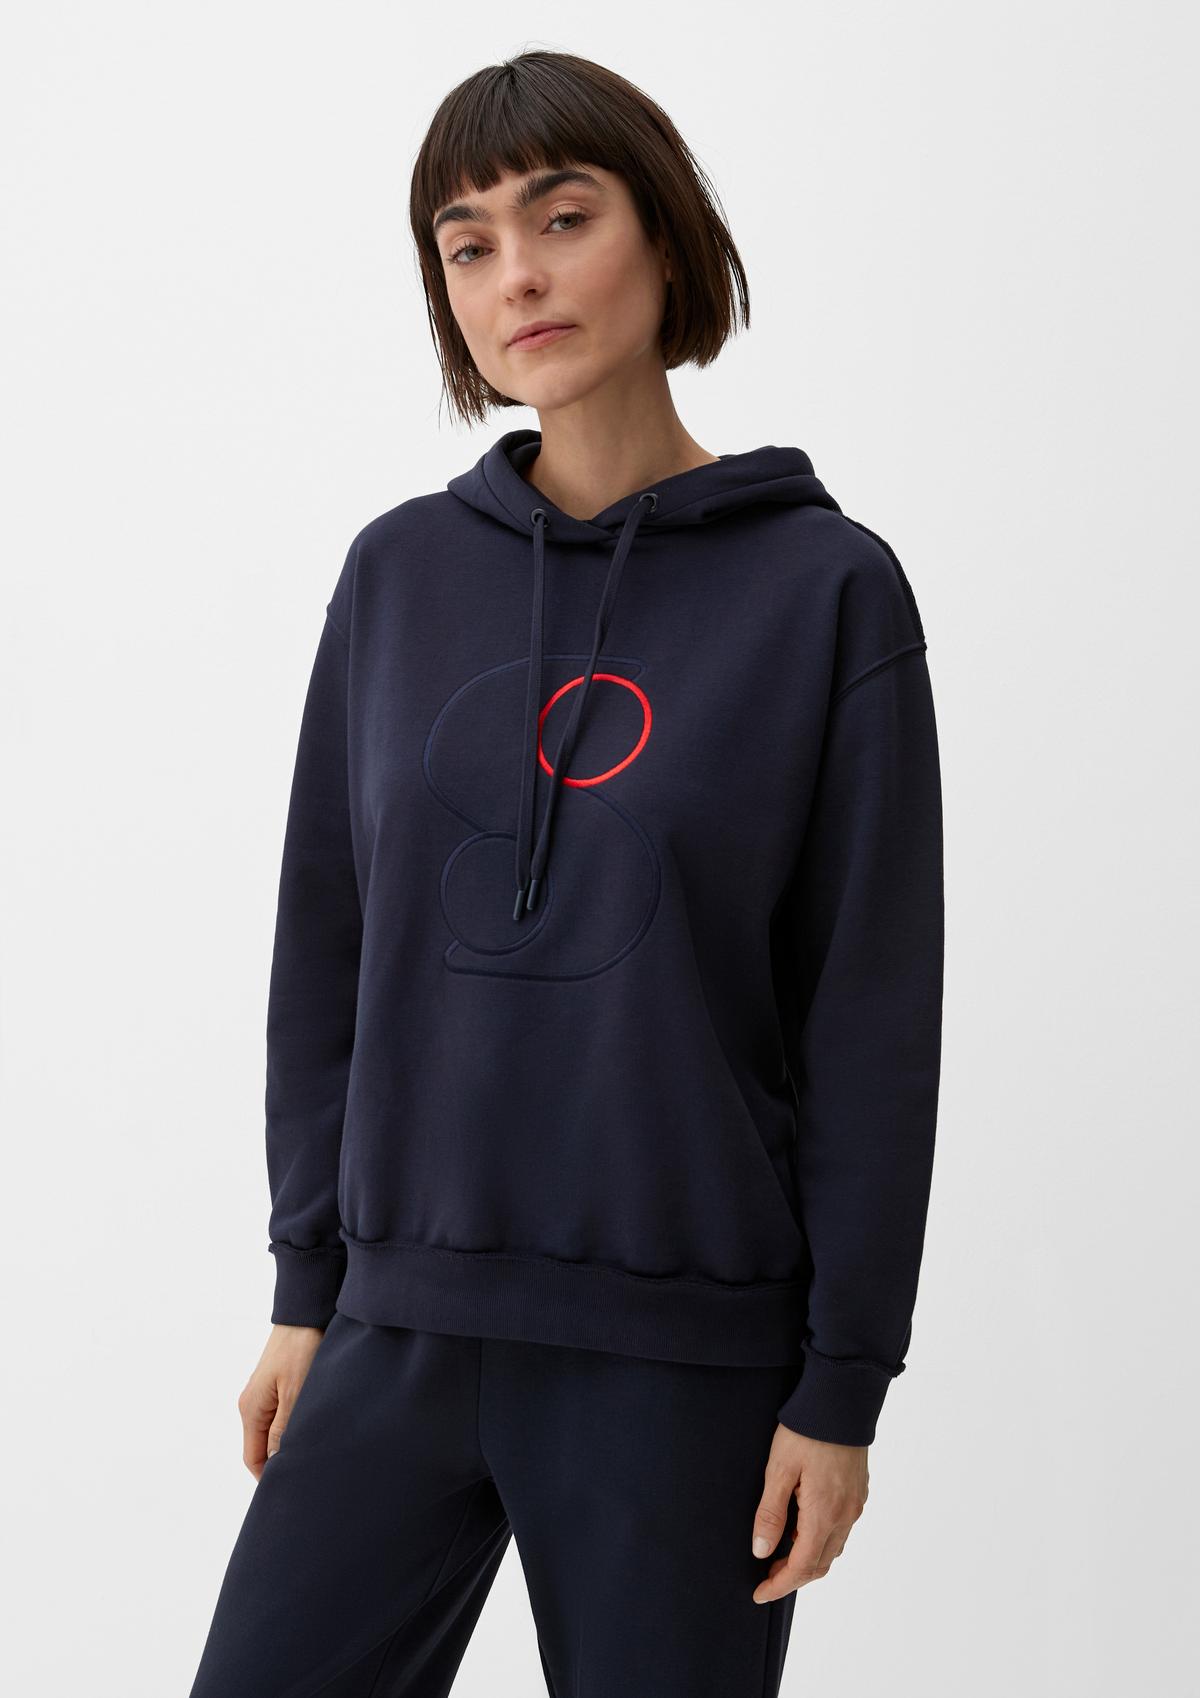 Sweatshirt in a layered look - navy